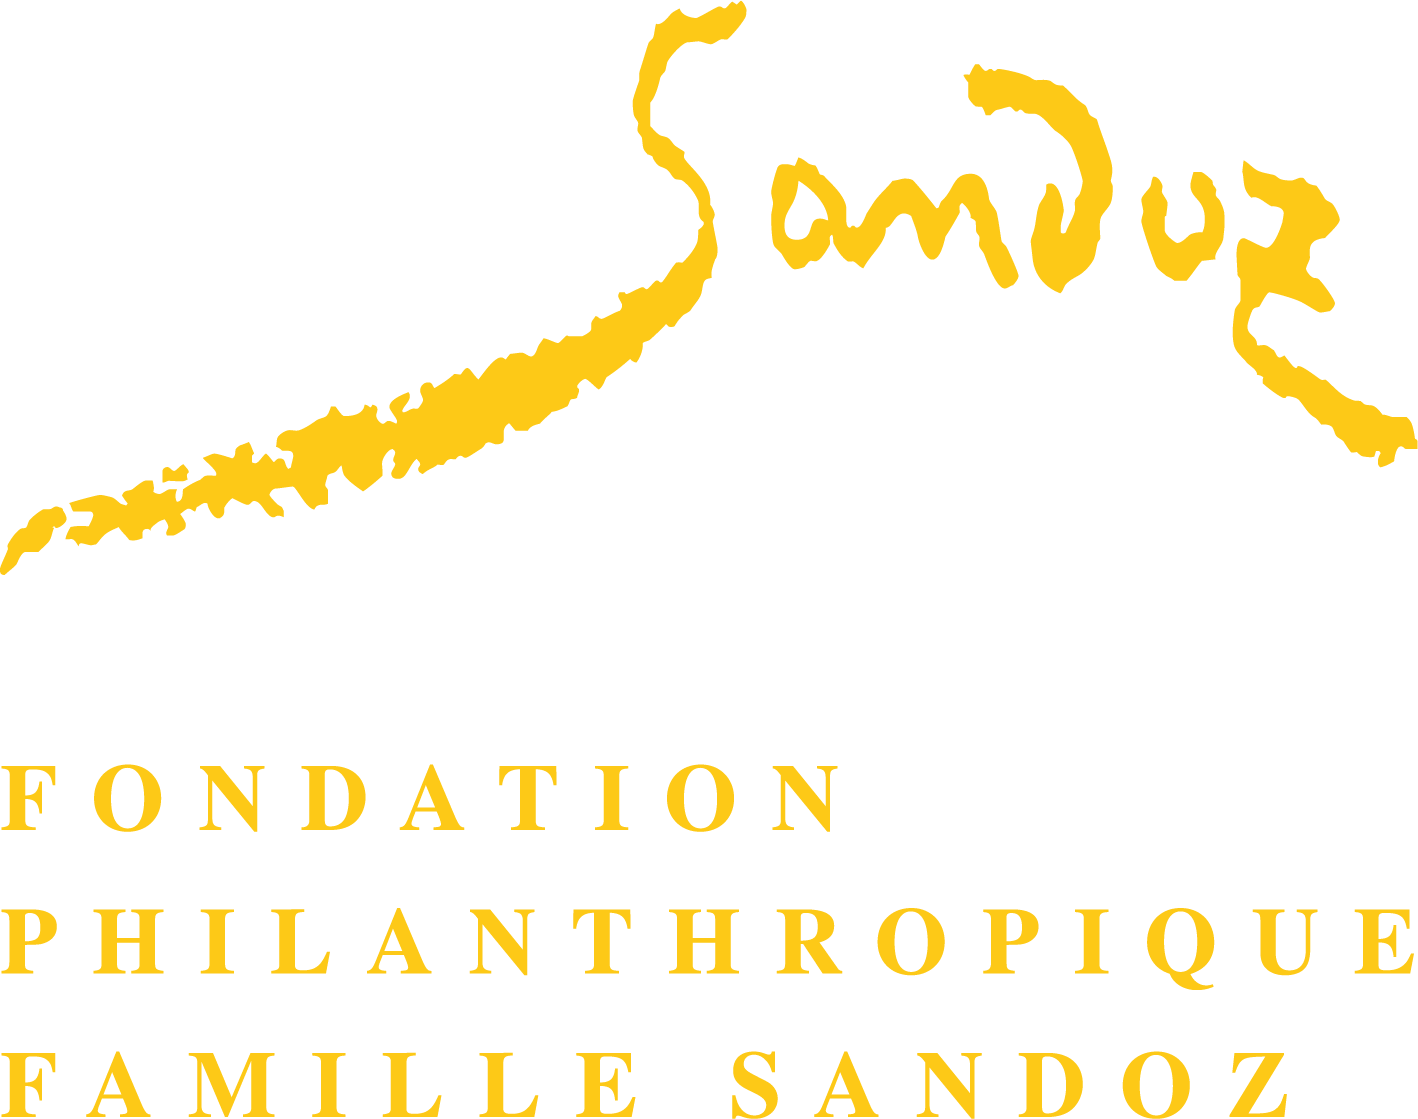 Sandoz - Fondation de famille